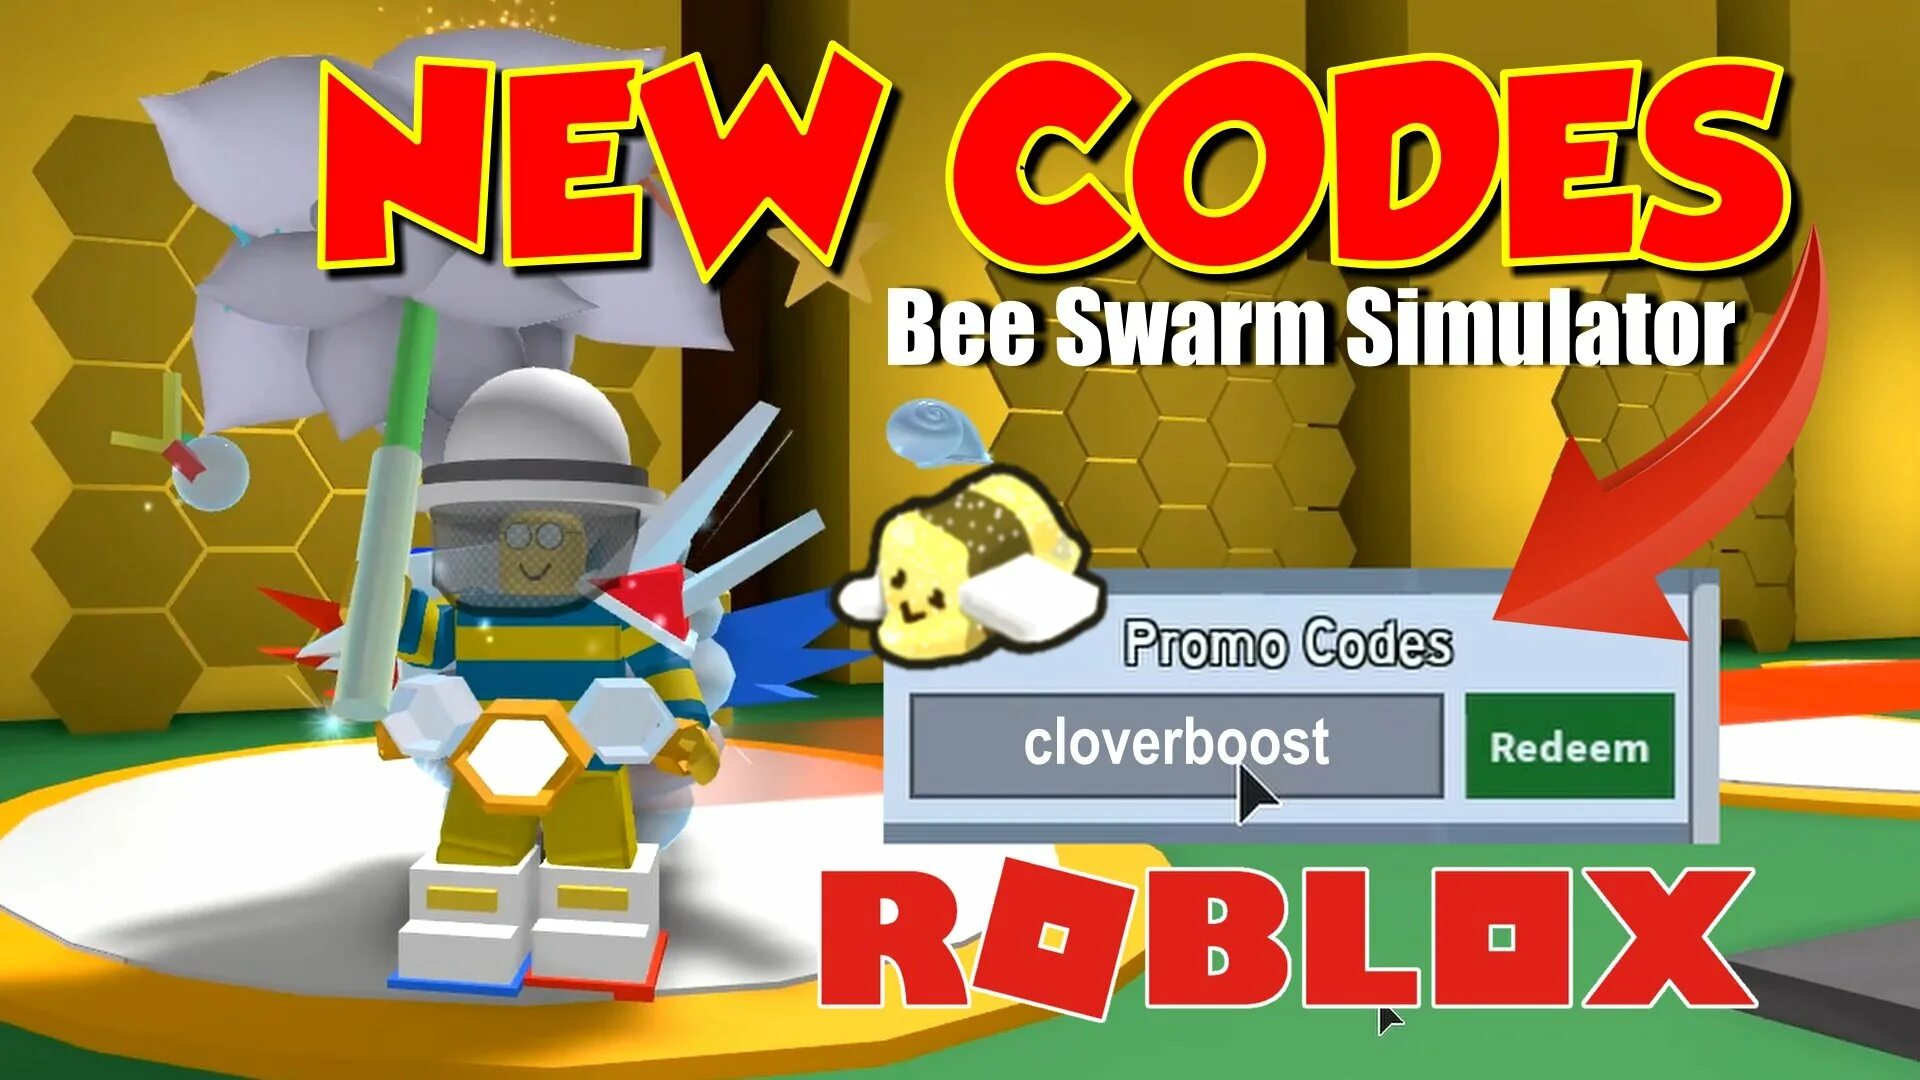 Bee Swarm Simulator codes. РОБЛОКС Bee Swarm Simulator. РОБЛОКС промокоды Bee Swarm Simulator. Roblox Bee Swarm Simulator codes.